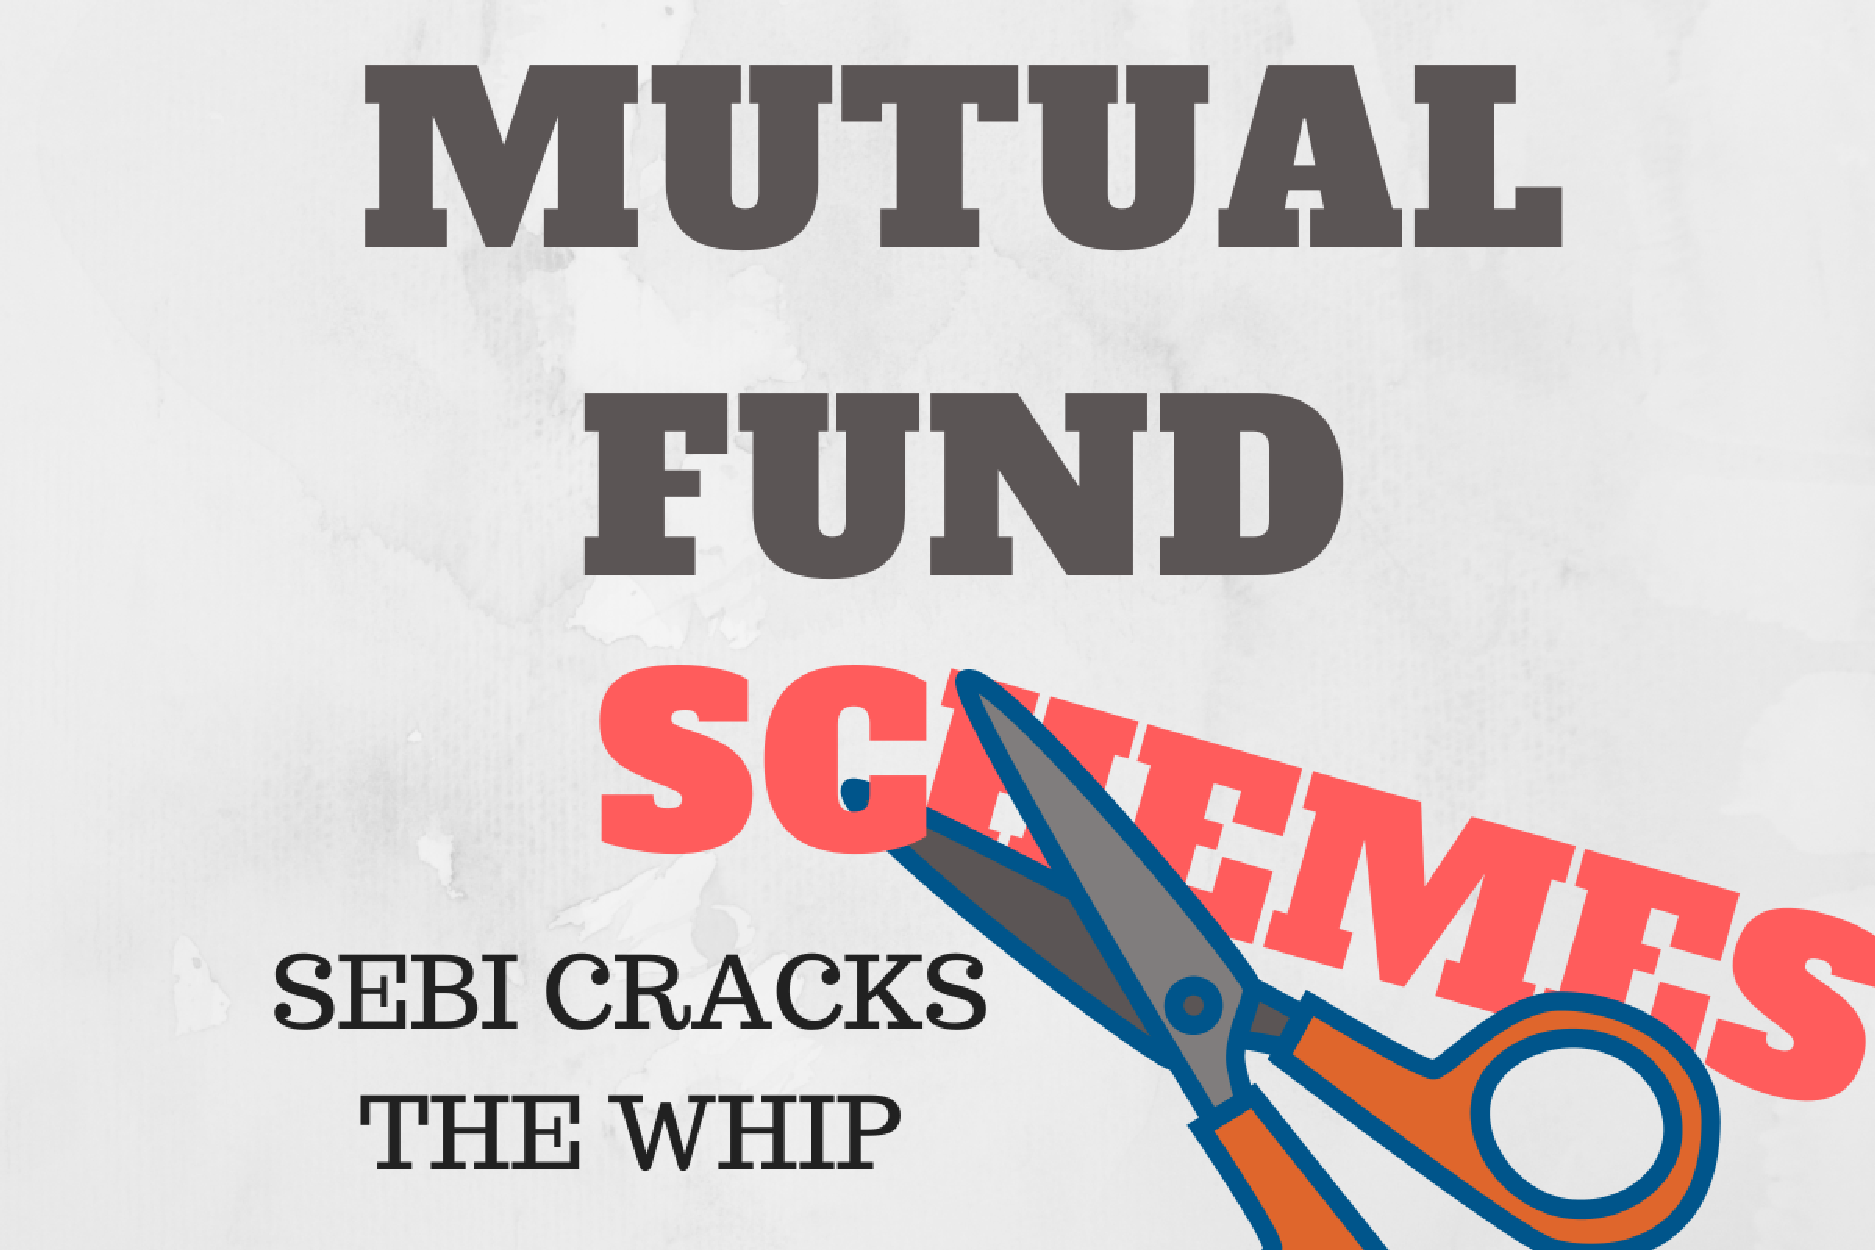 Mutual Fund schemes - SEBI Circular